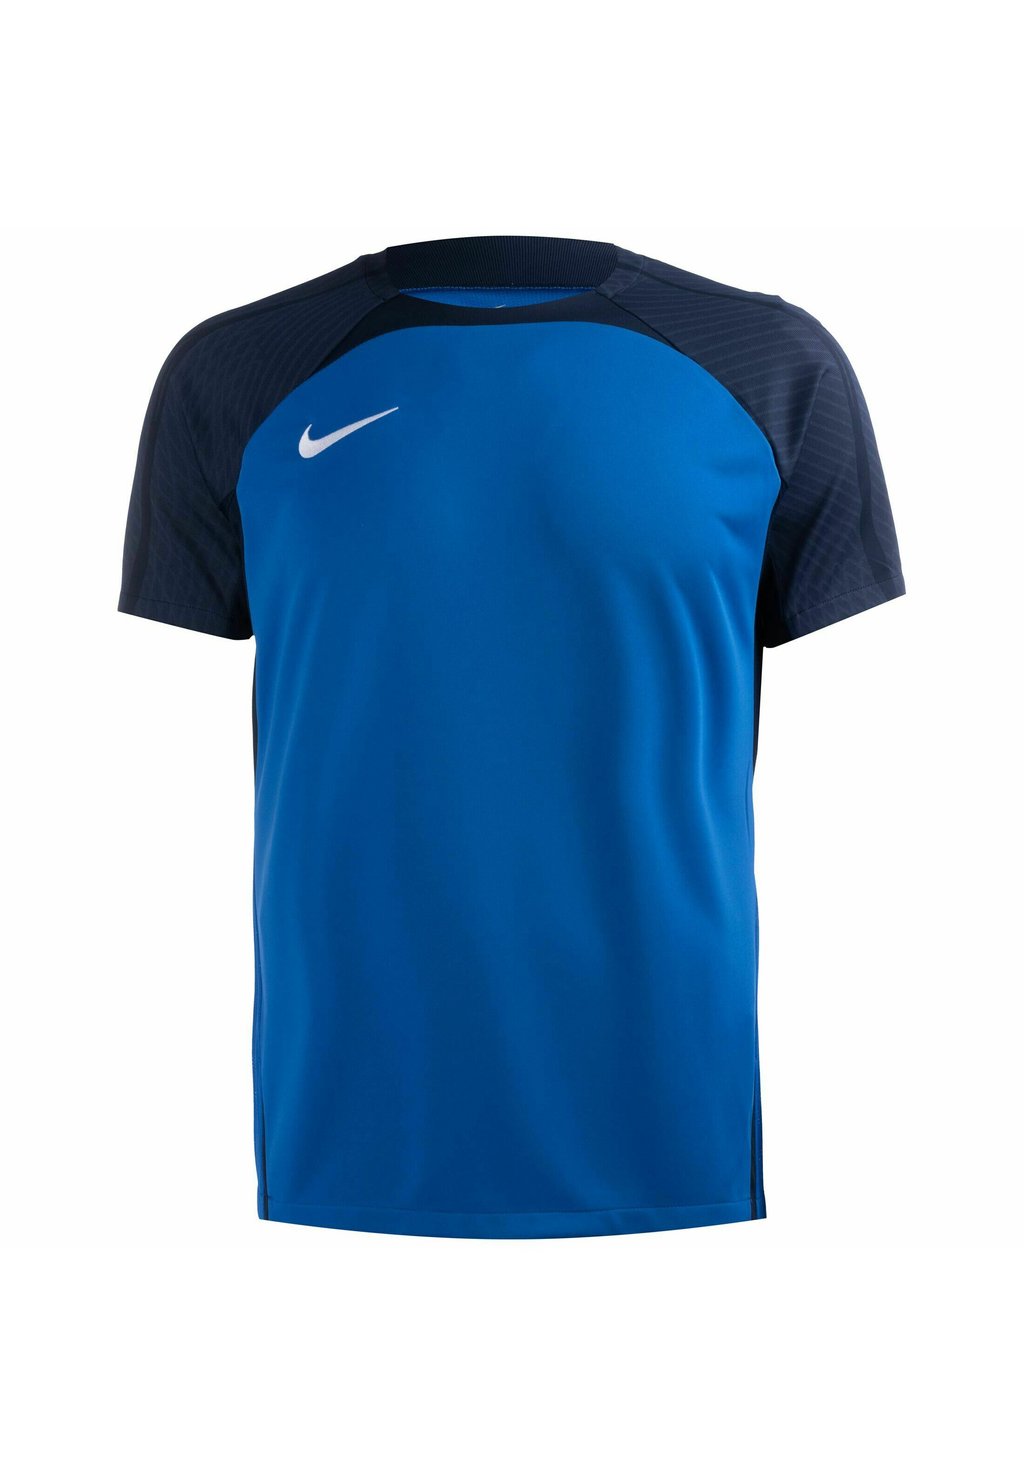 Спортивная футболка Strike Iii Fussball Nike, цвет royal blue obsidian obsidian white